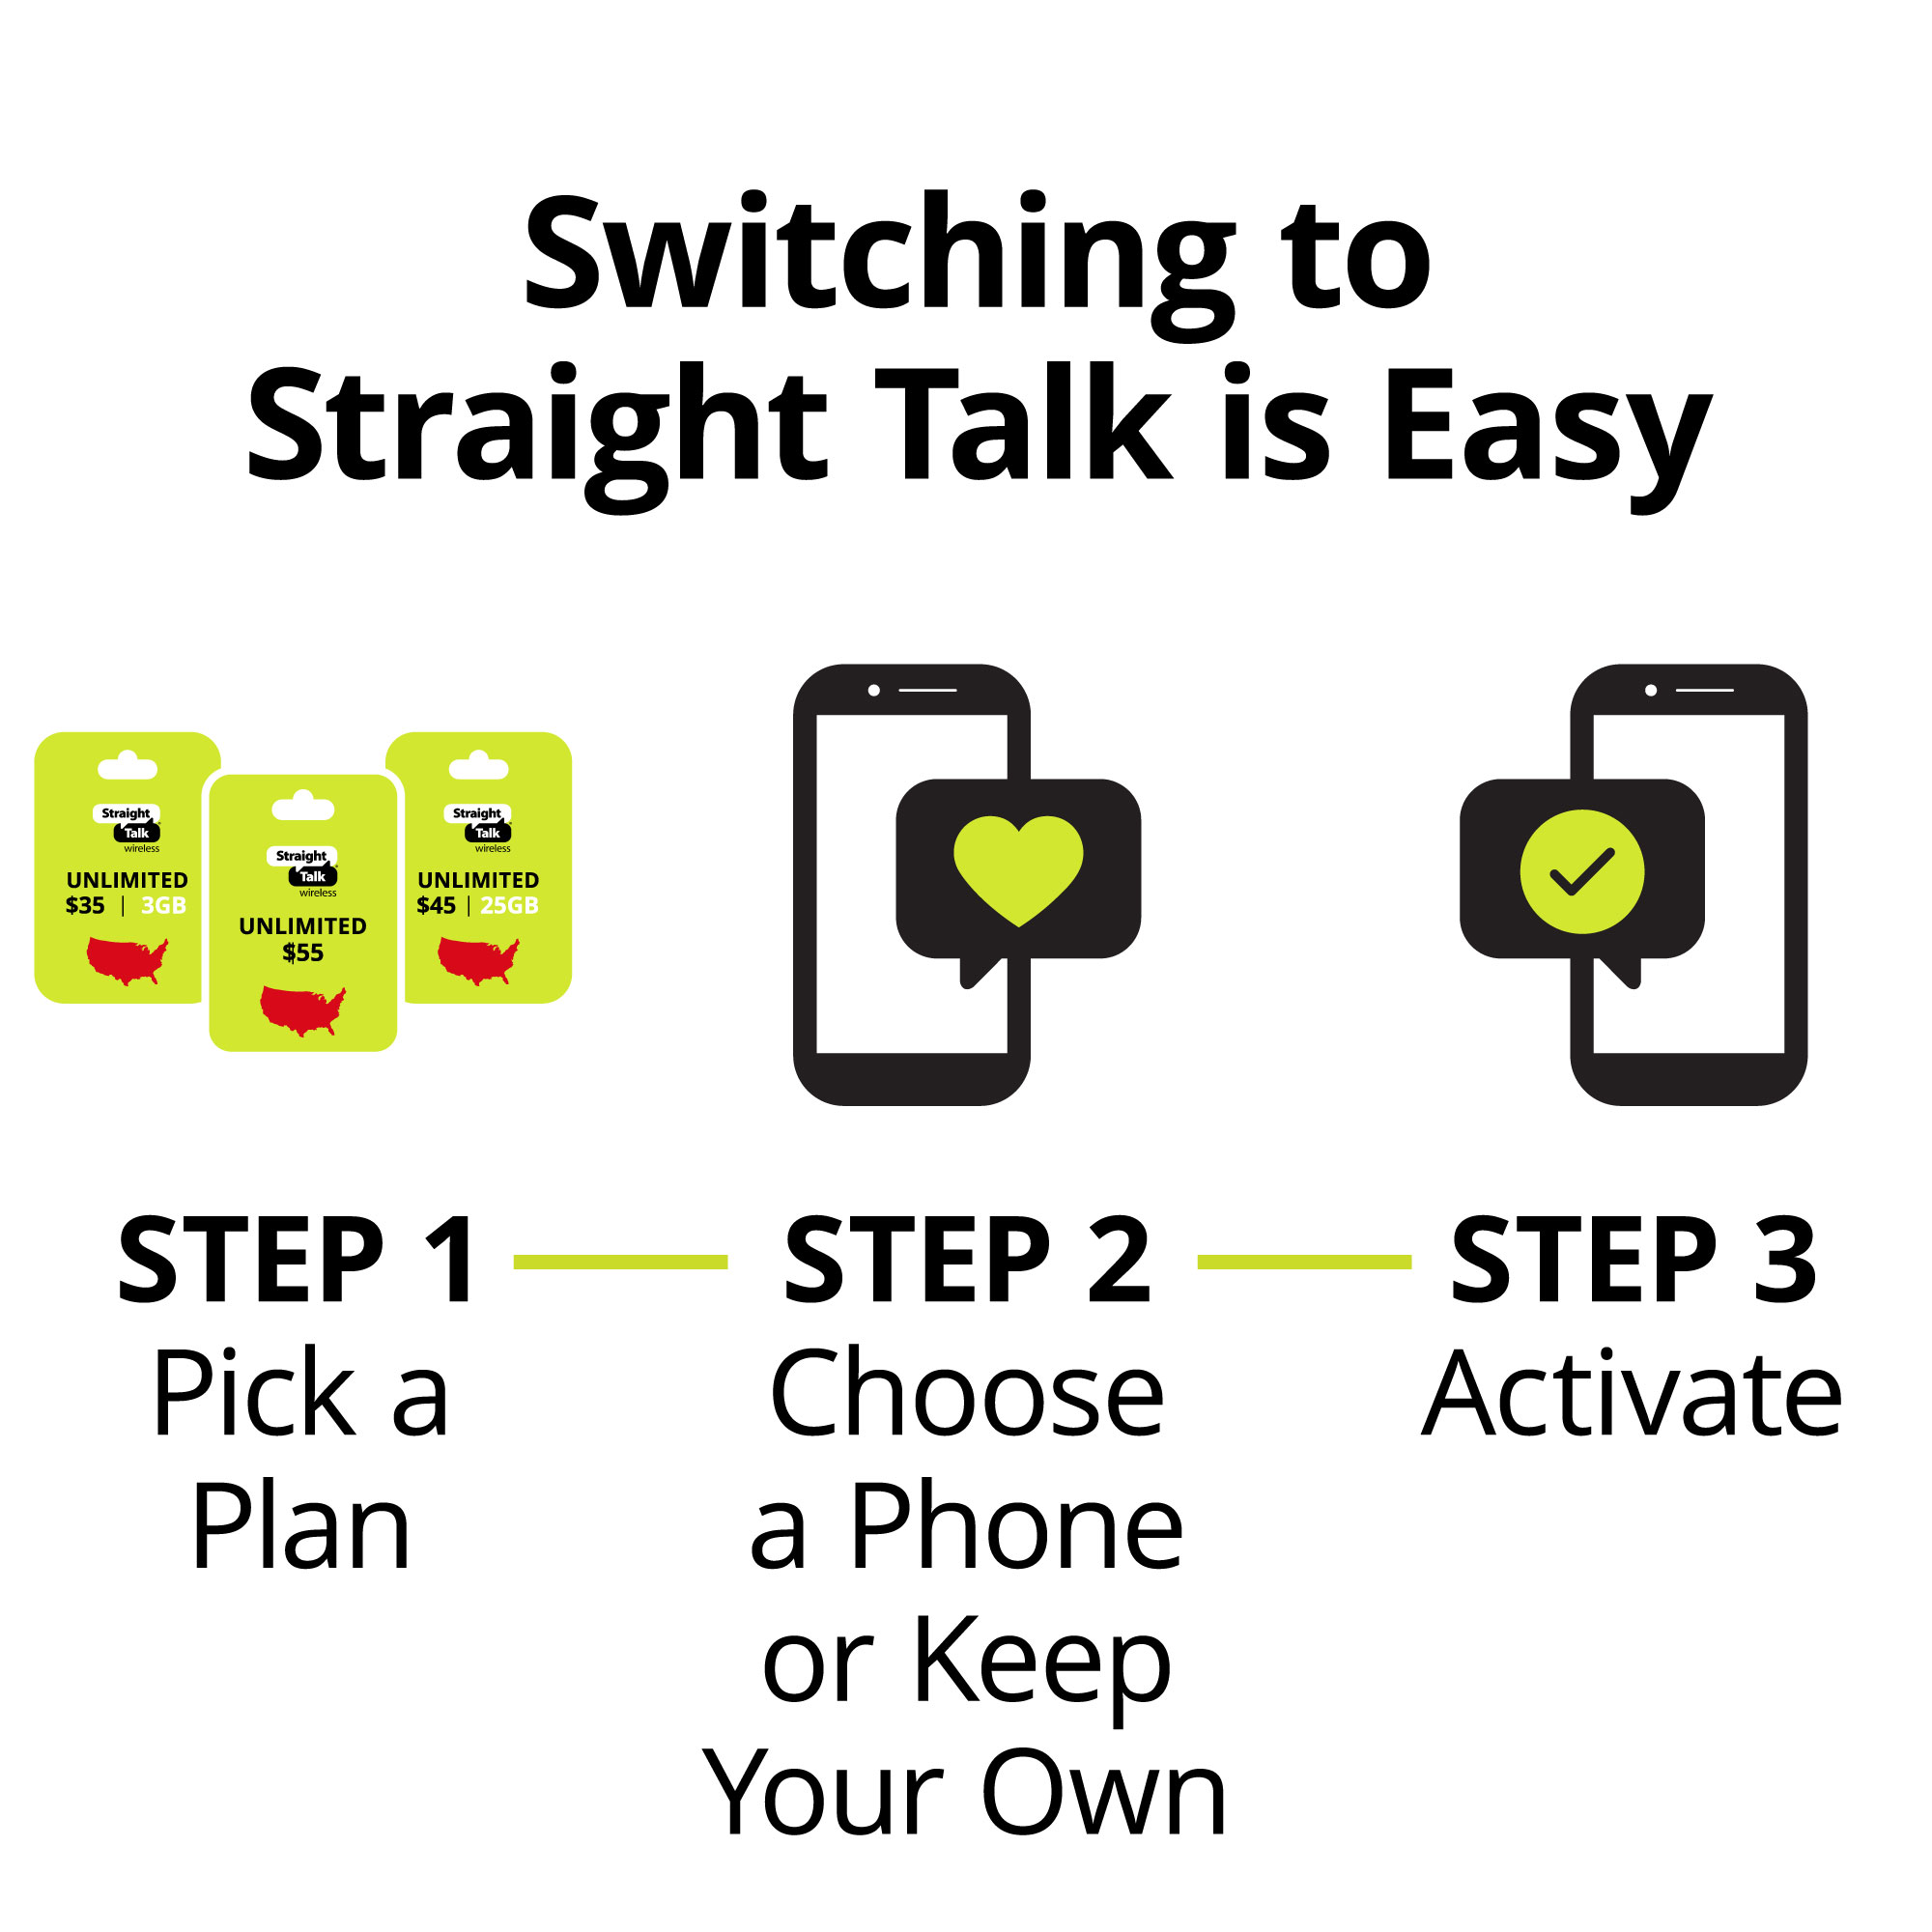 Straight Talk LG Solo, 16GB, Gray - Prepaid Smartphone - image 5 of 11